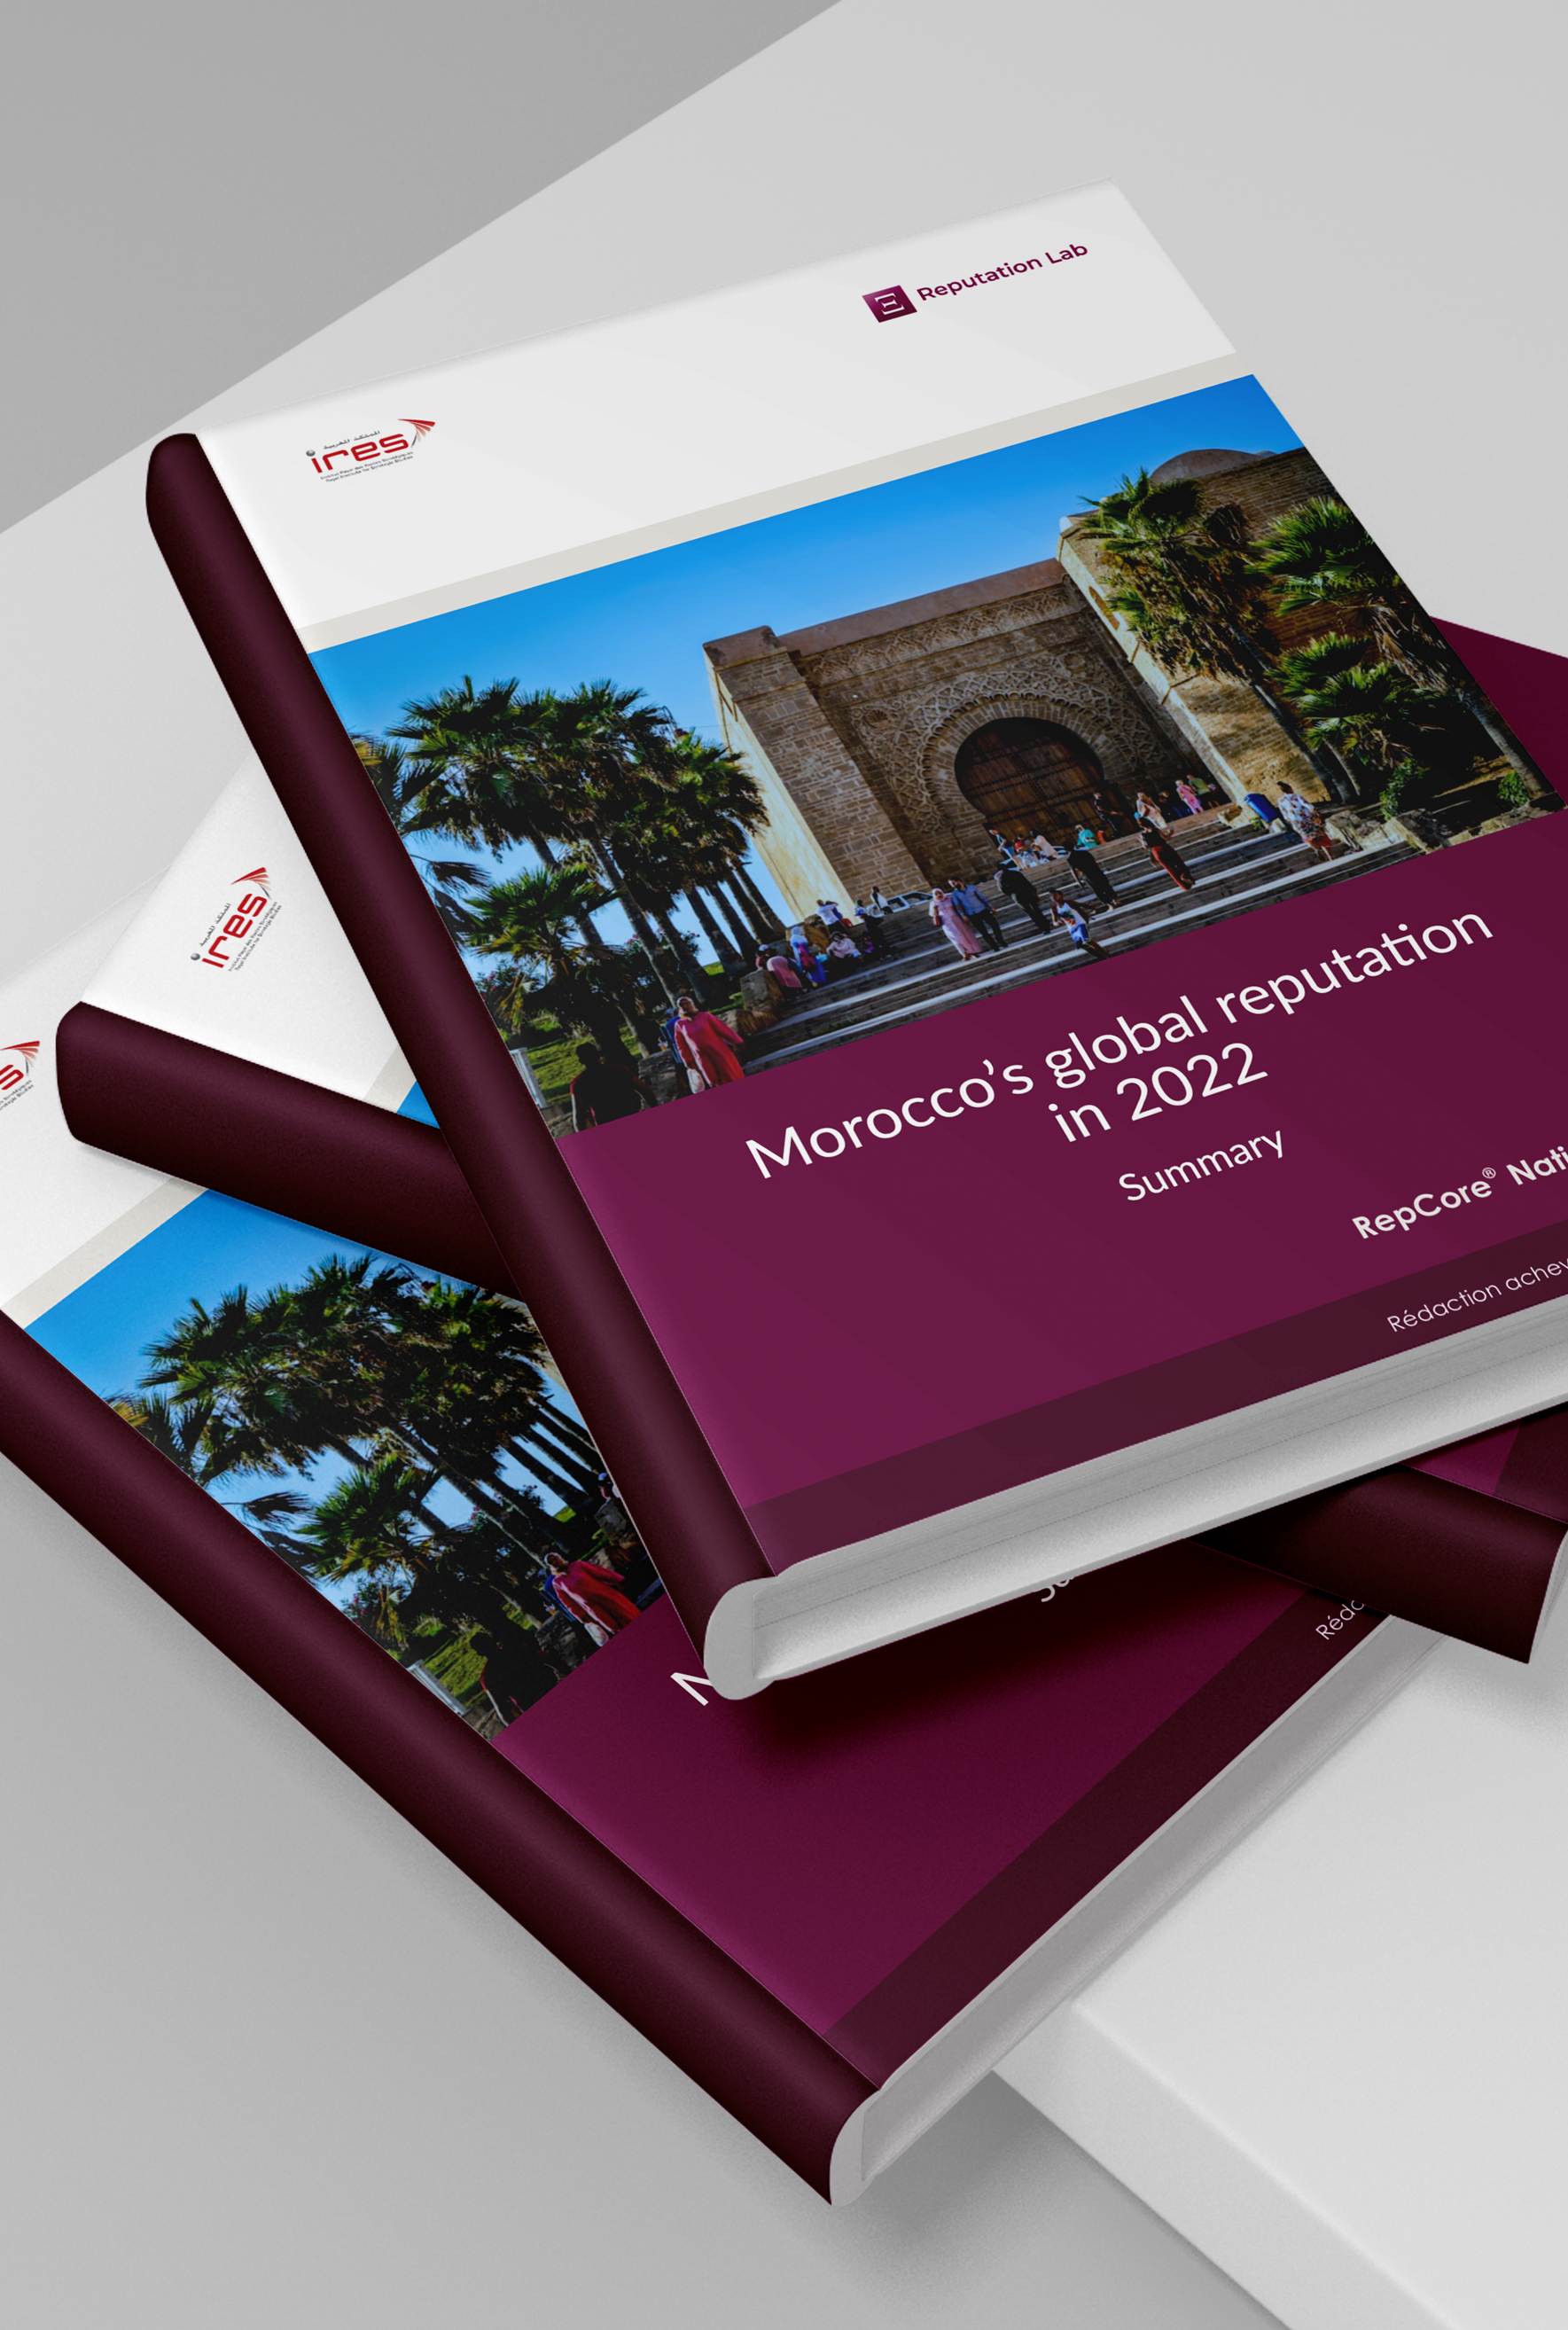 Morocco’s global reputation in 2022